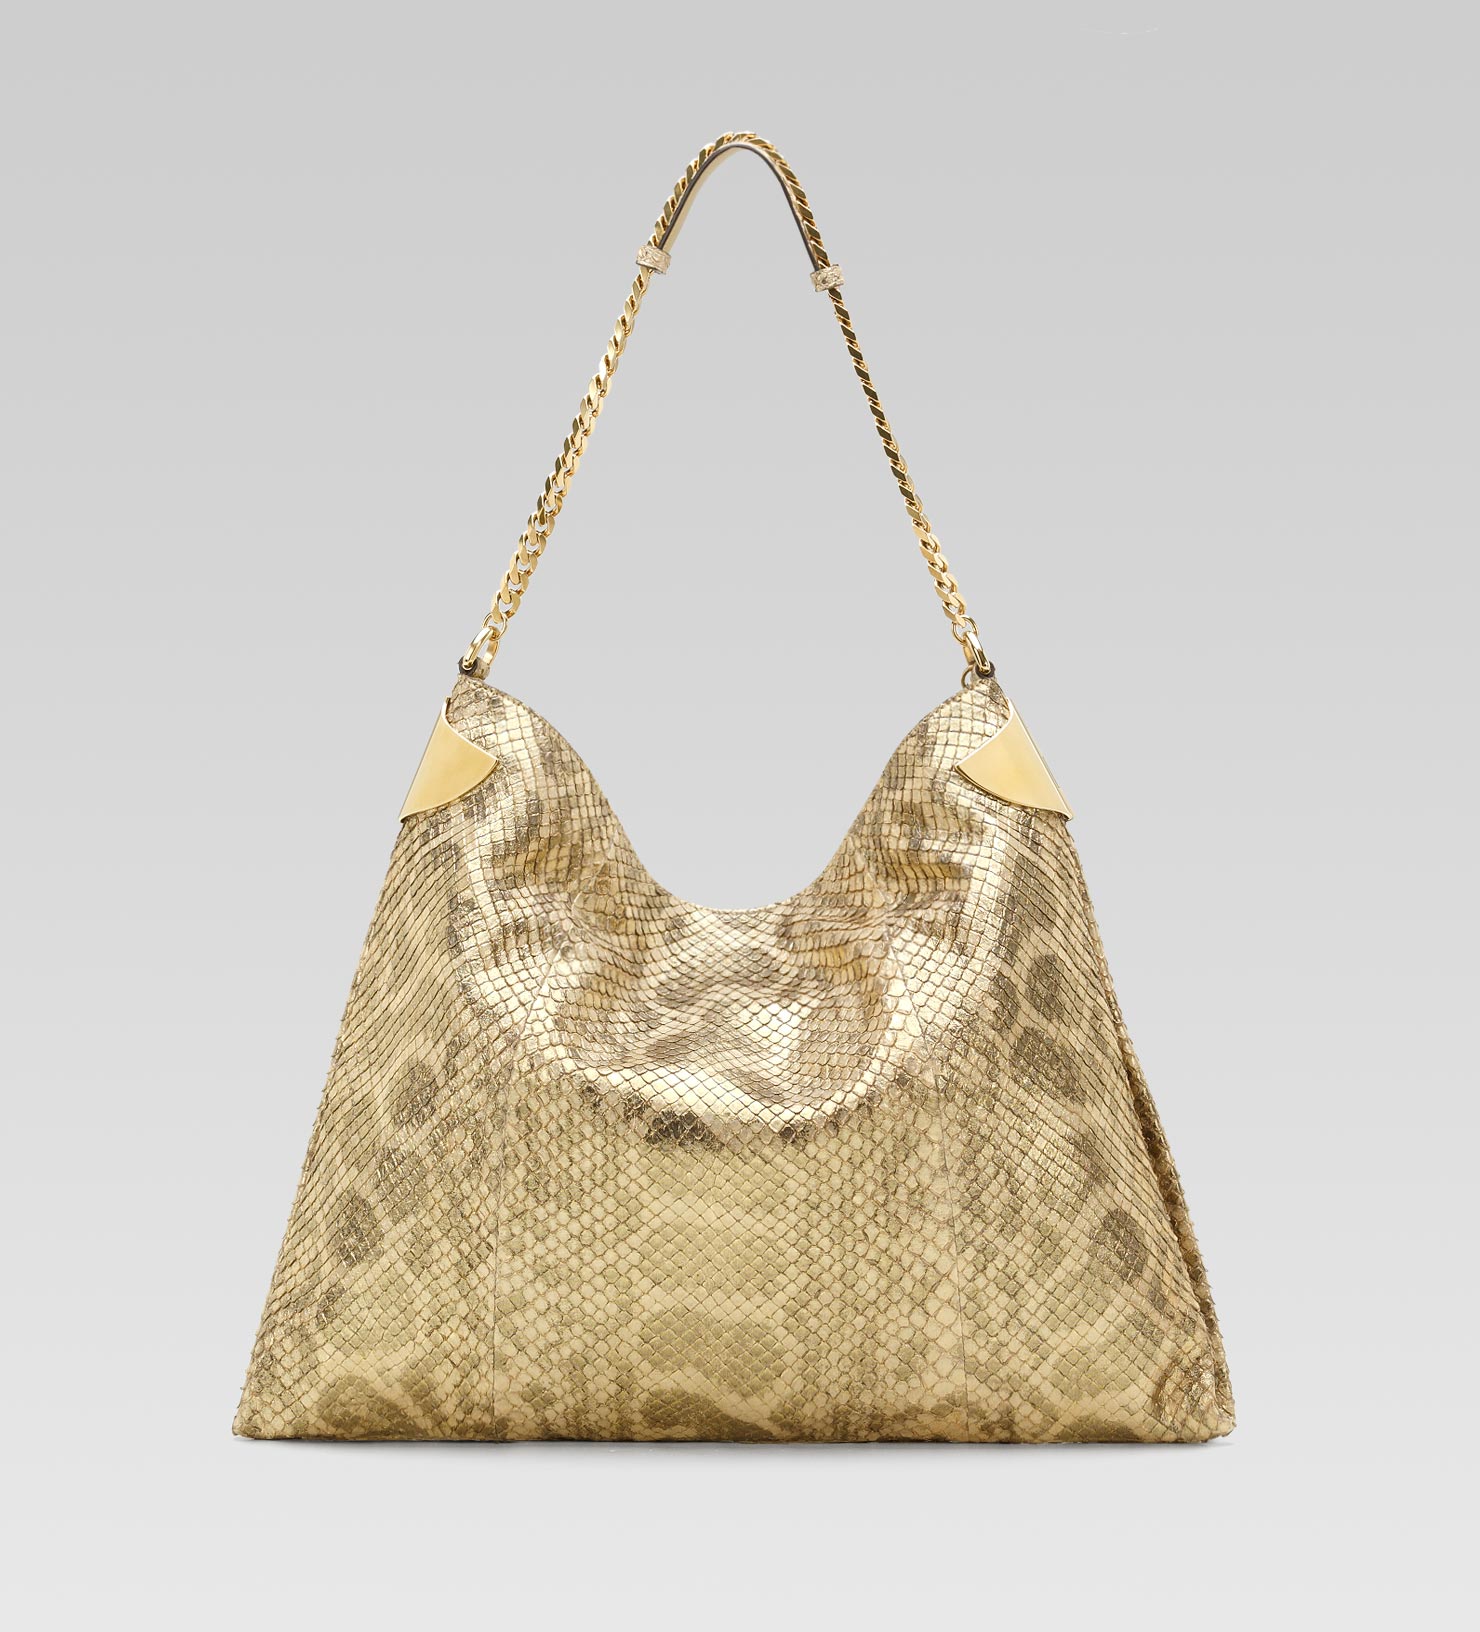 Gucci Gucci Shoulder Bag in Gold (Metallic) - Lyst